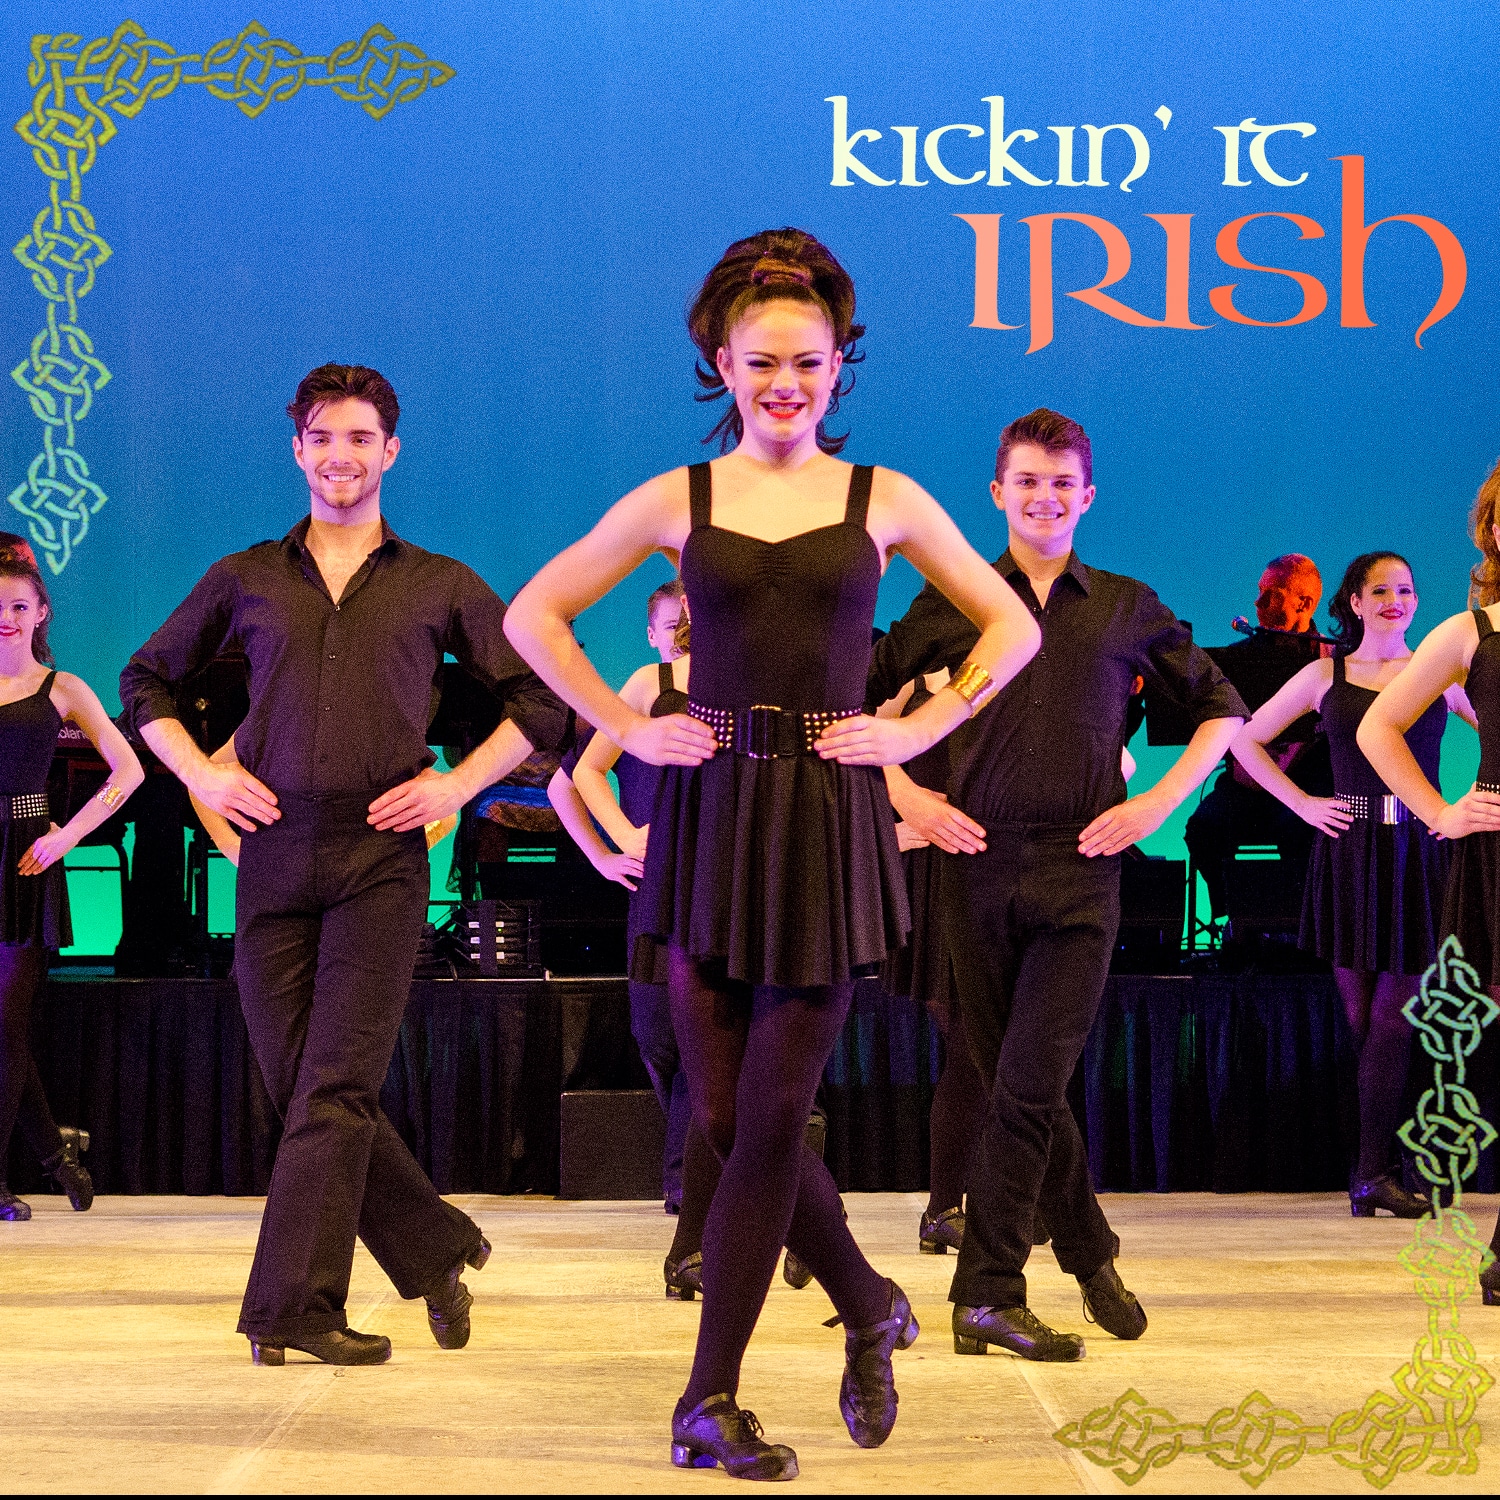 Kids love the Kickin' It Irish Matinee